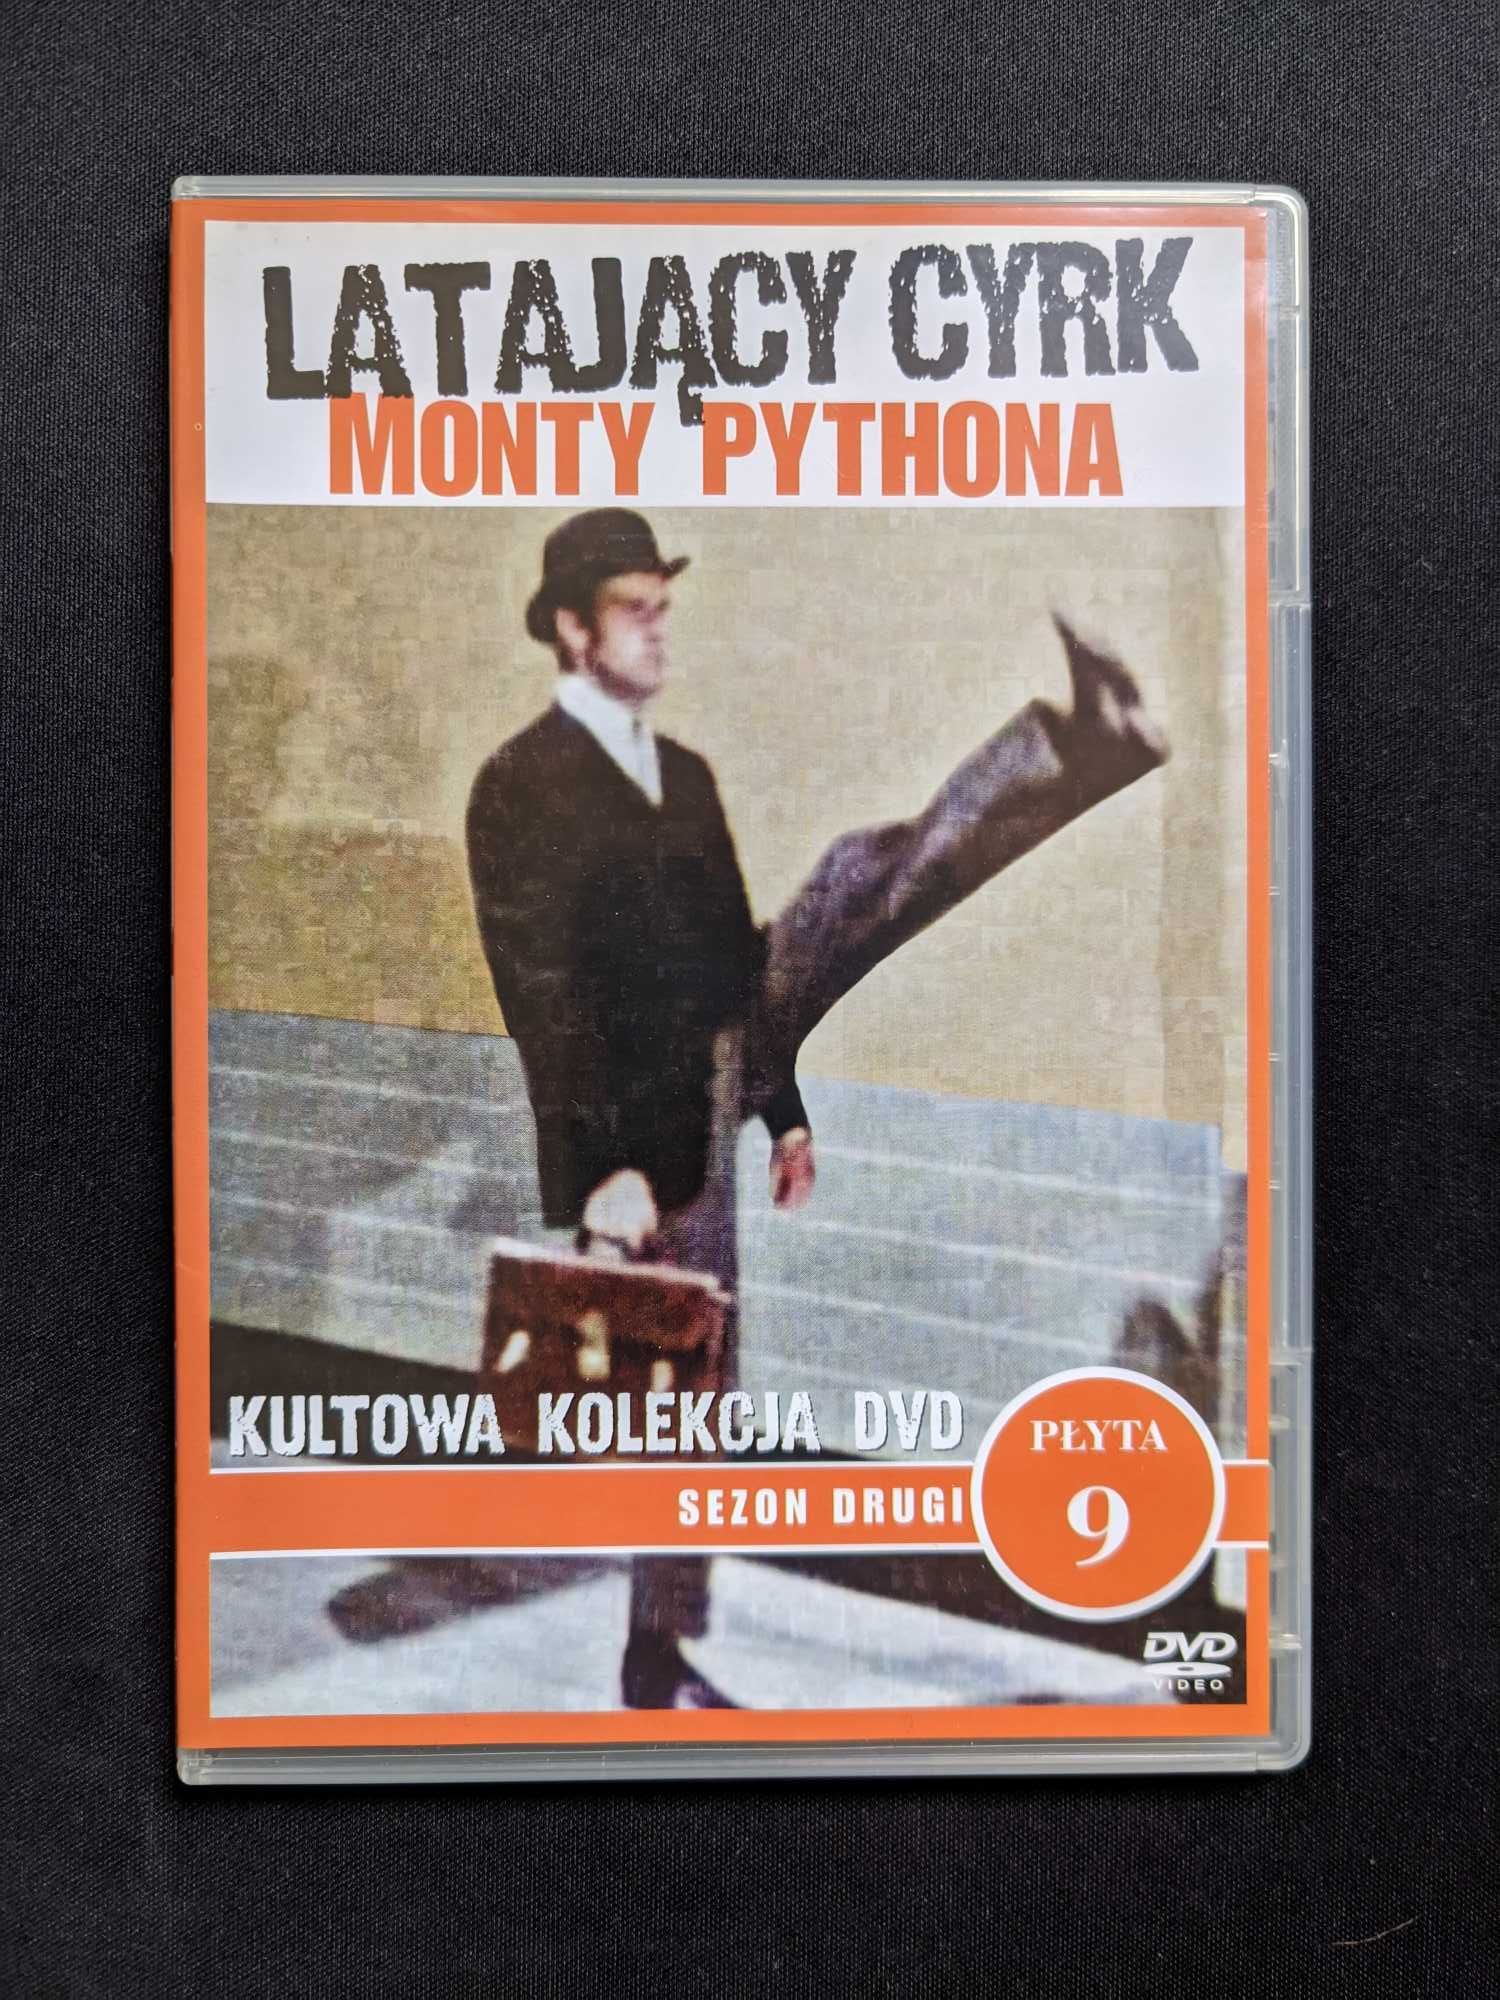 DVD Latający Cyrk Monty Pythona, Sezon Drugi Płyta 9